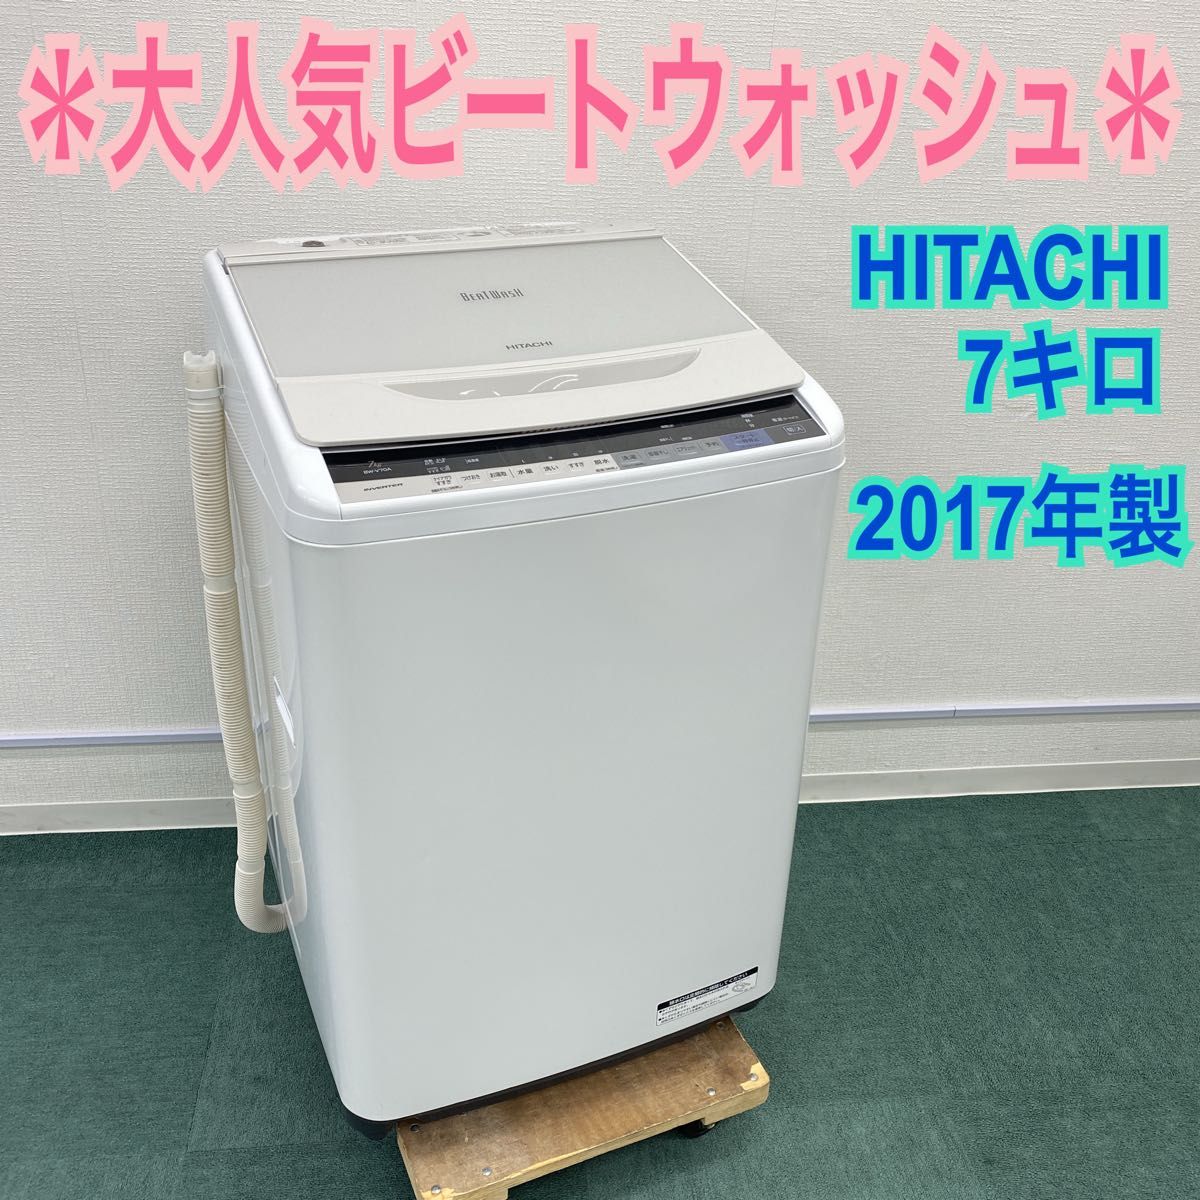 12*52 HITACHI 洗濯機 BW-V100B ビートウォッシュ 全自動洗濯機 10kg